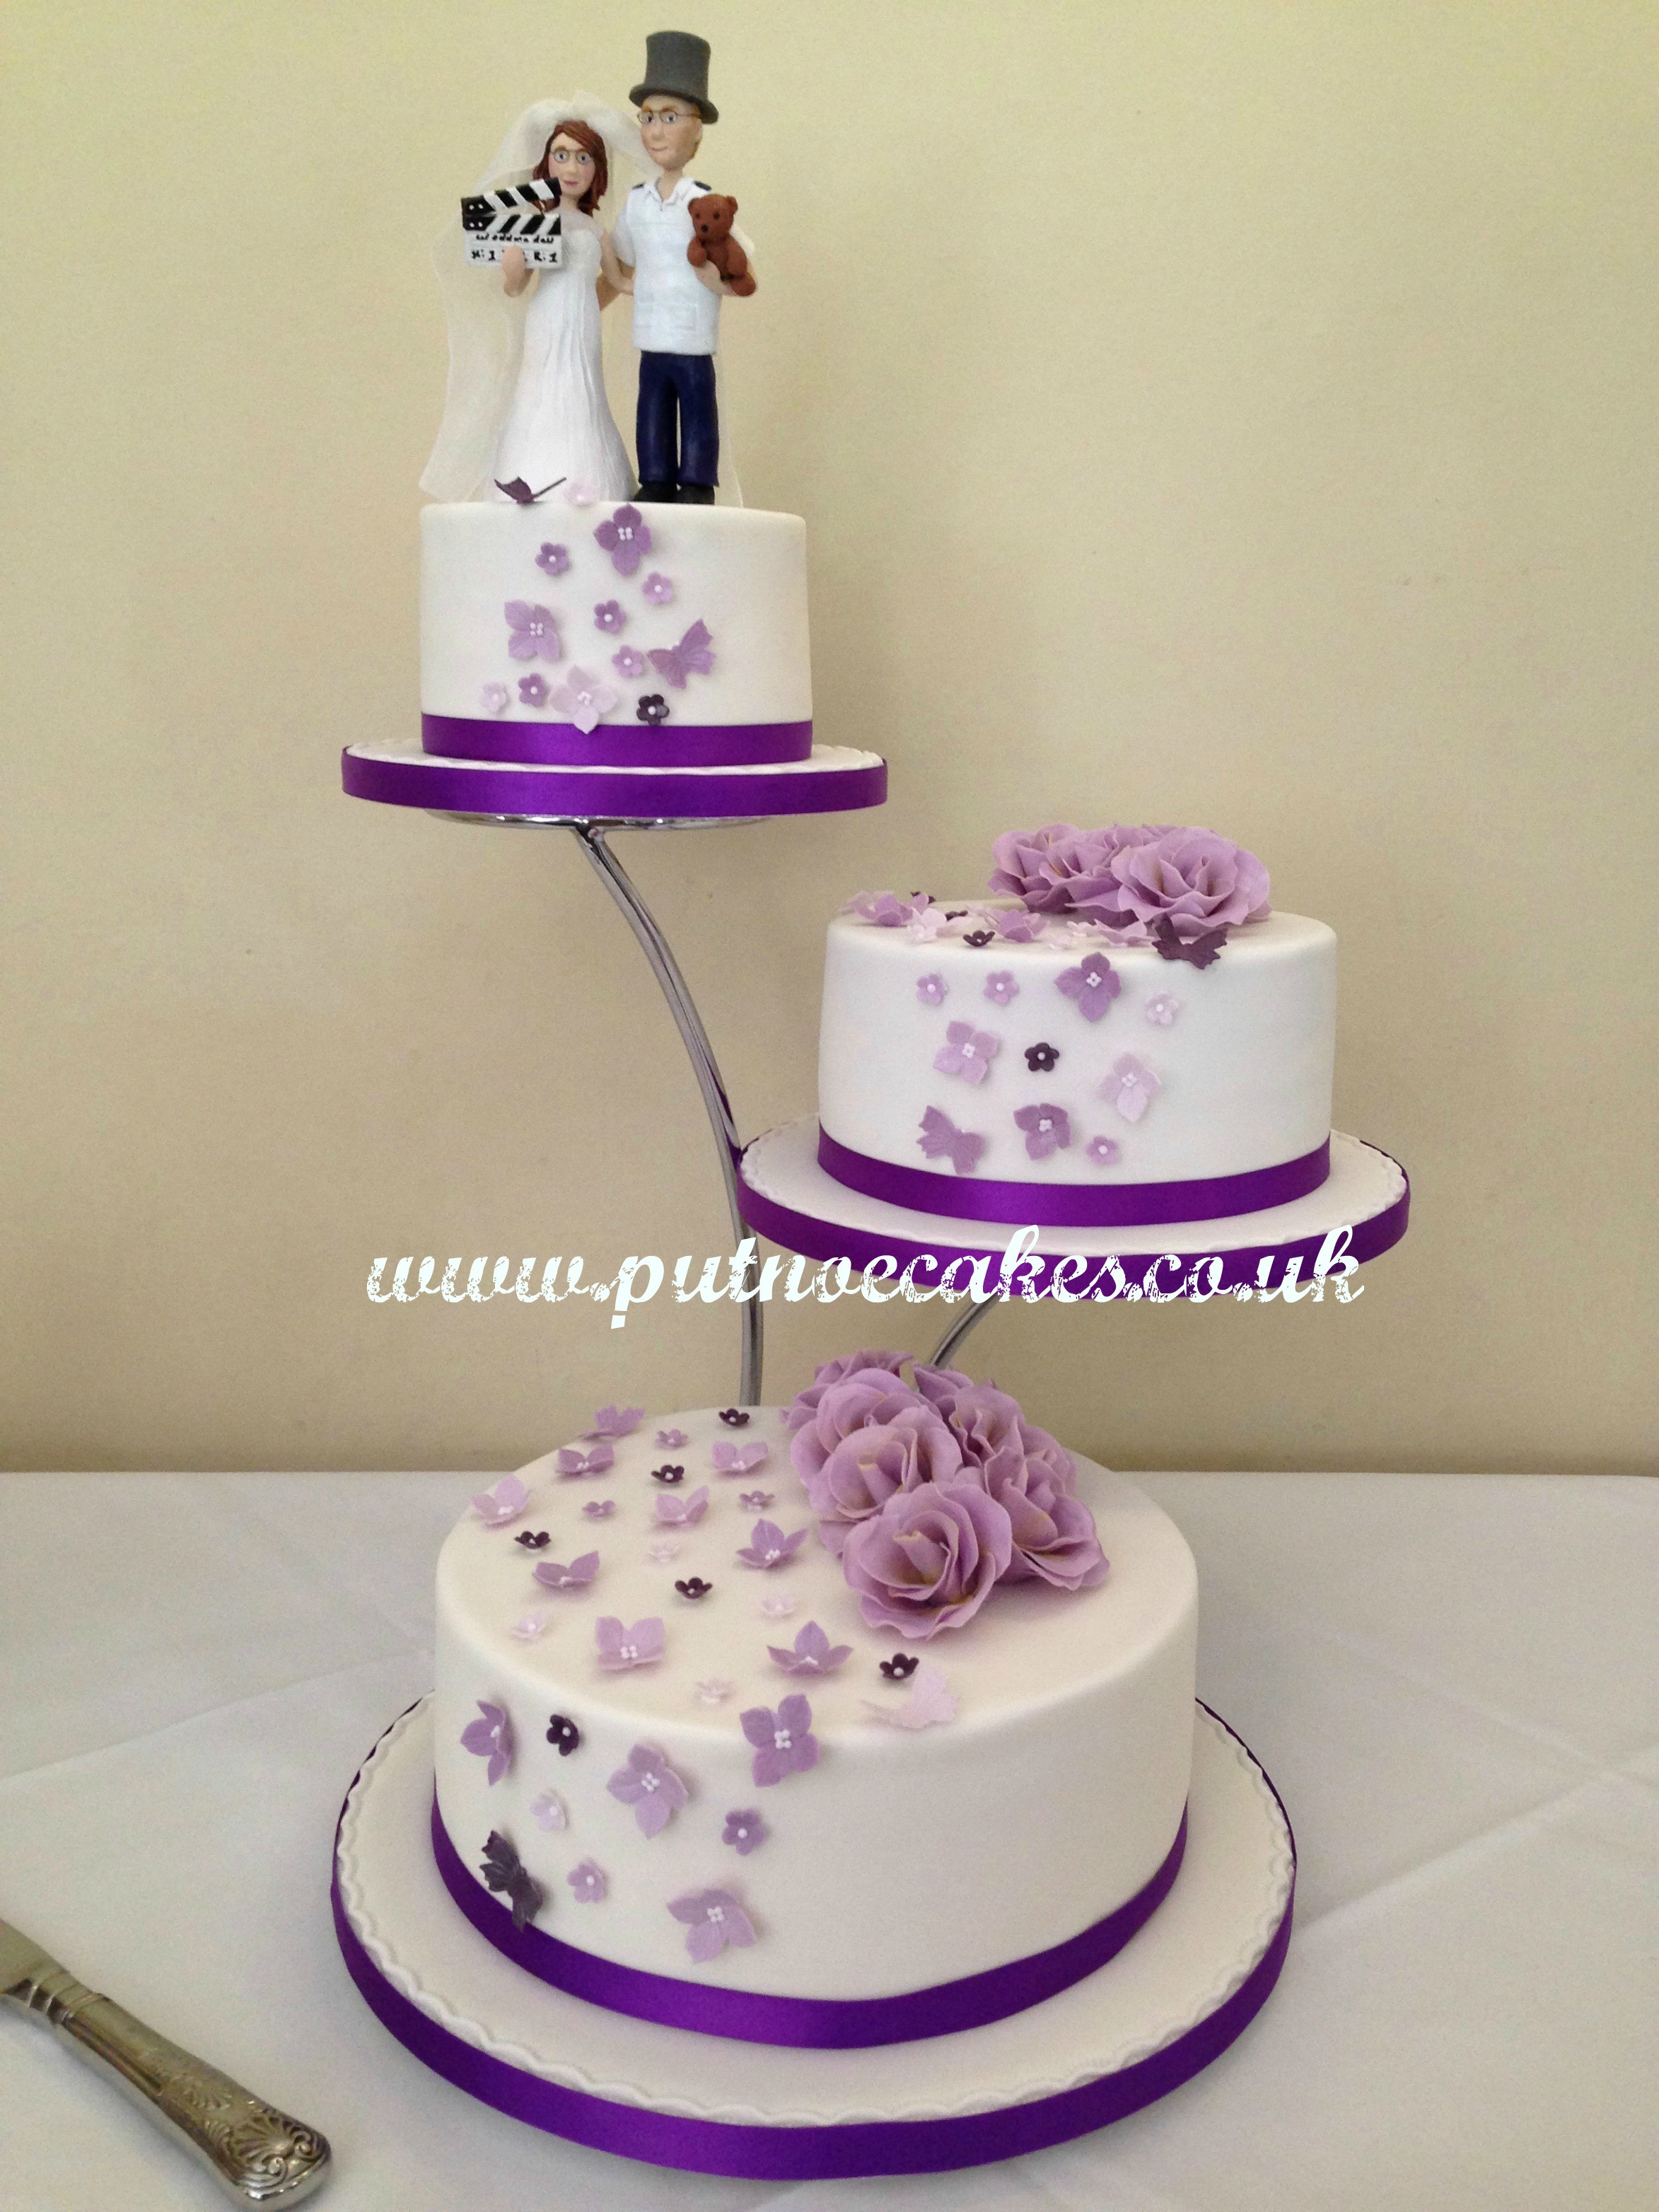 Seperate Tier Wedding Cakes
 Separate Tier Wedding Cakes